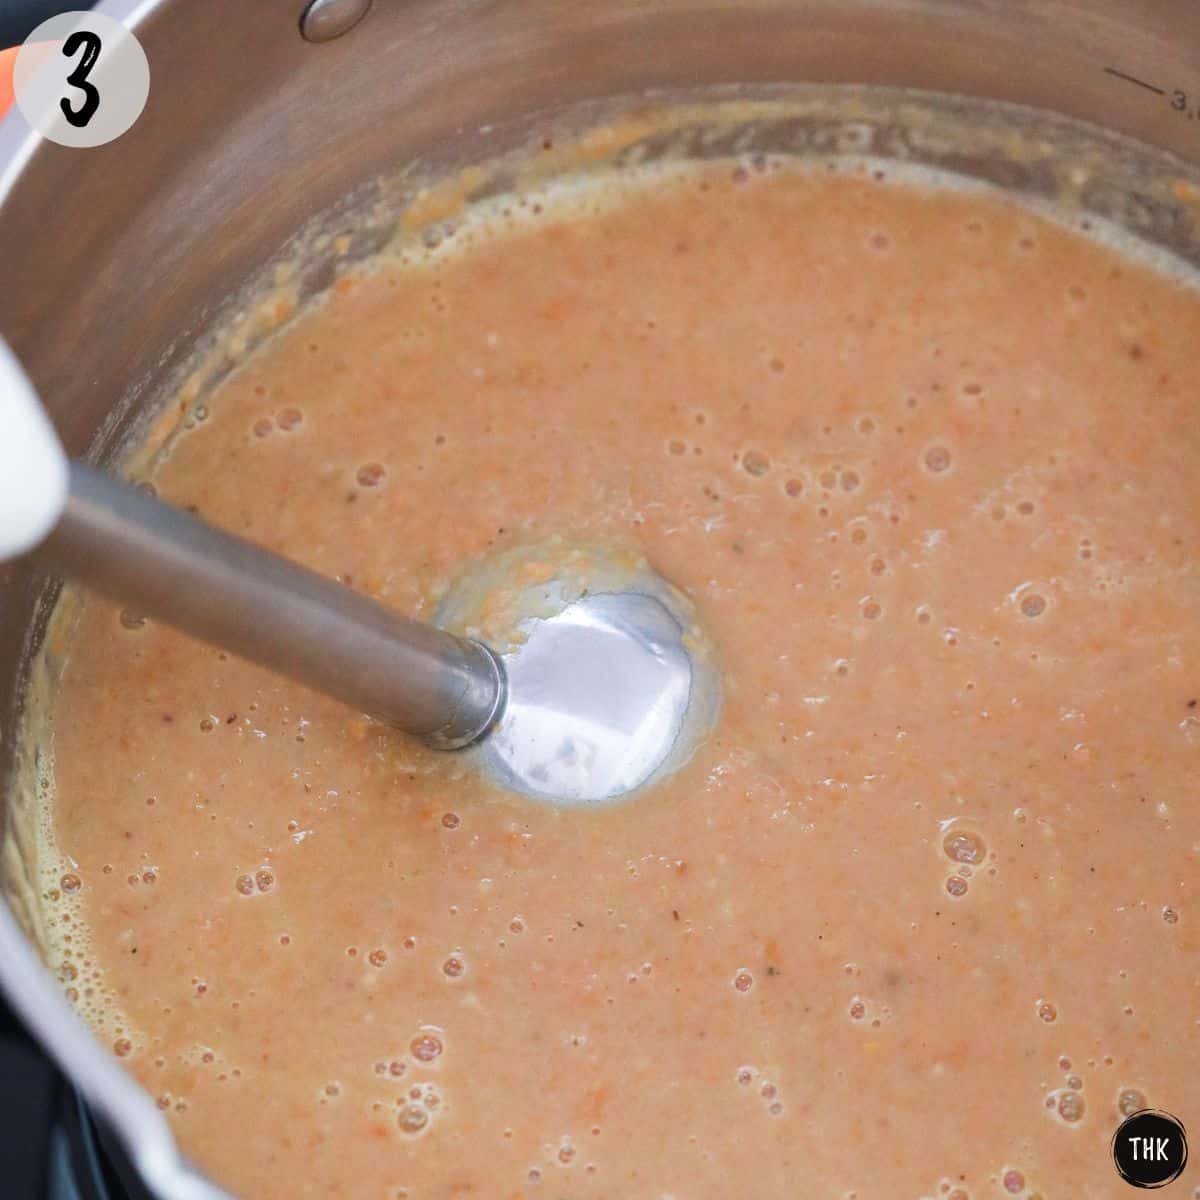 Hand blender pureeing pot of soup.